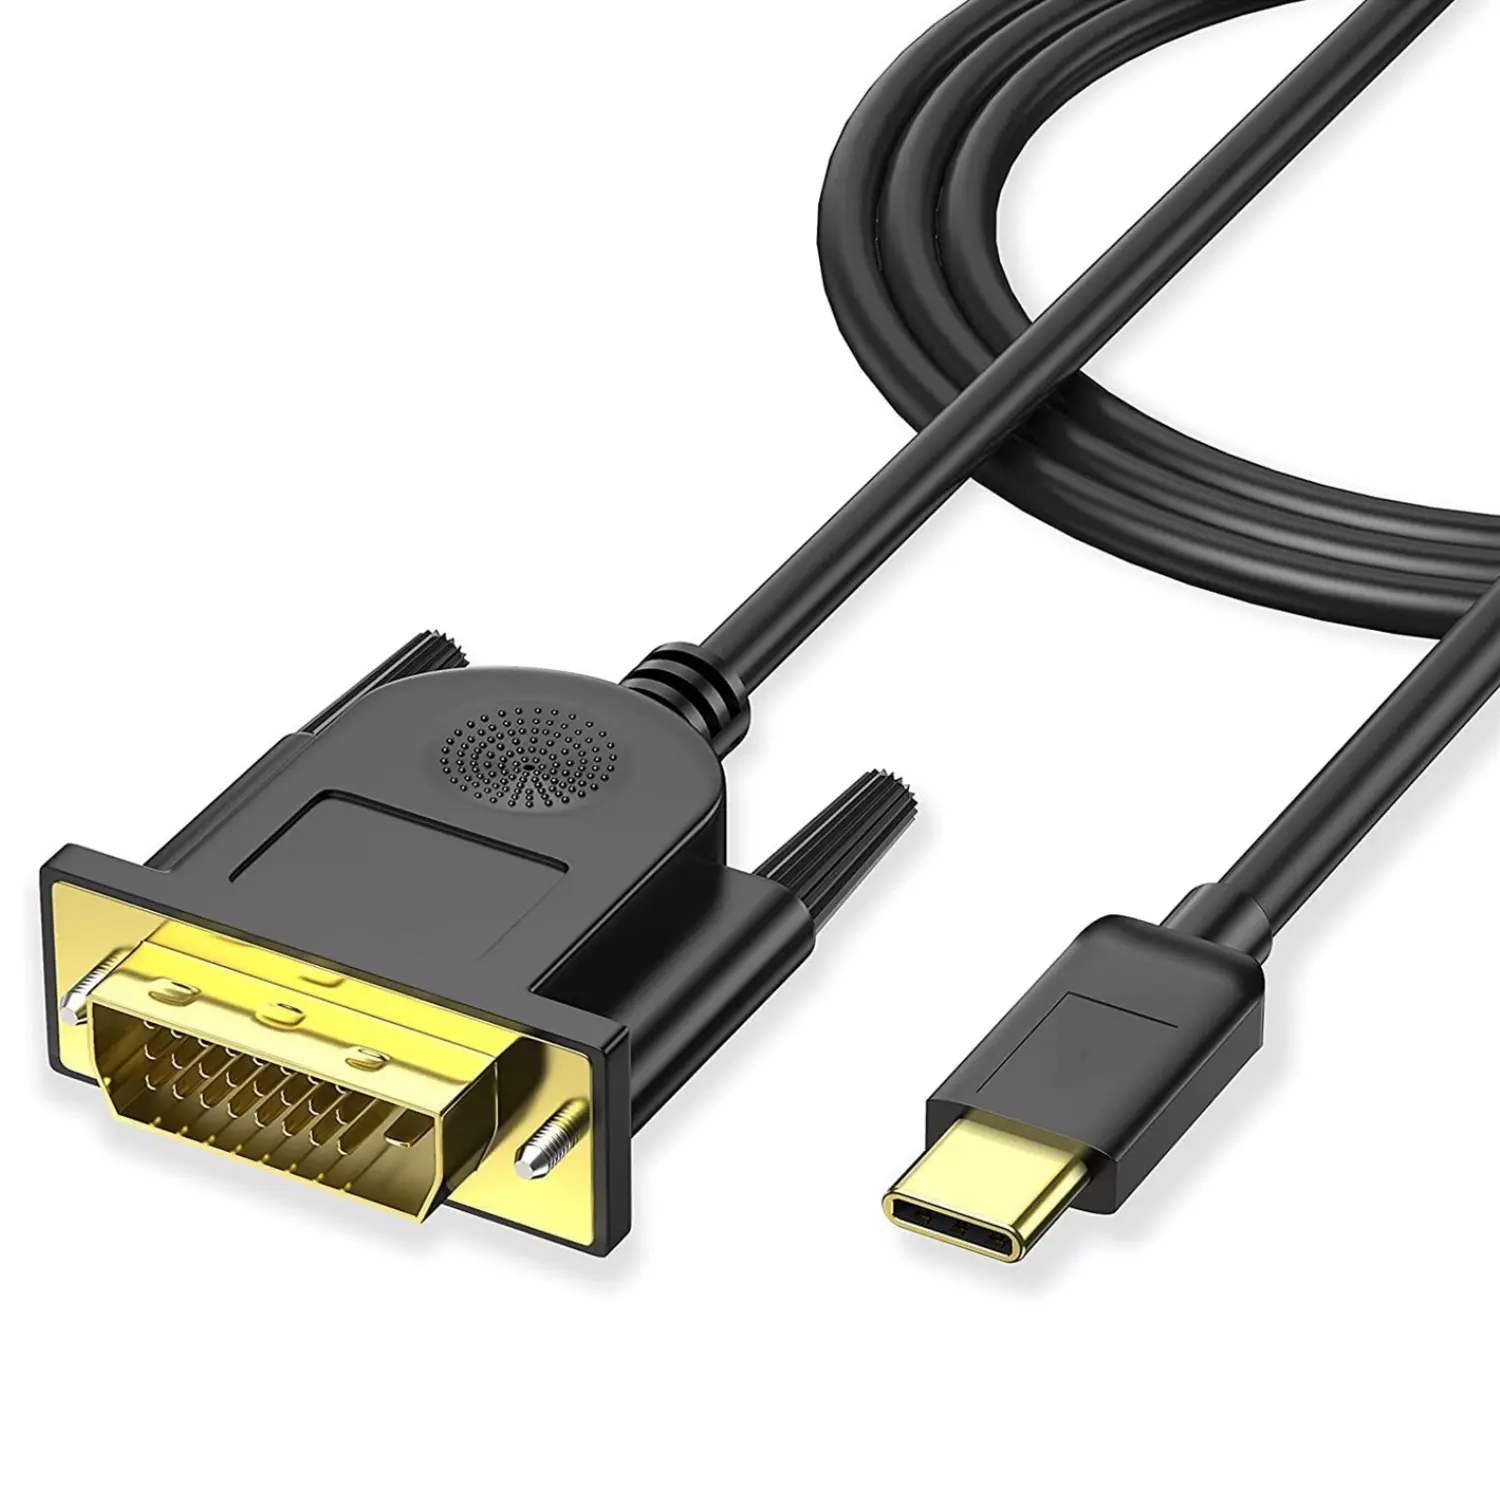 Adaptor USB C ke DVI 1080P60Hz QGeeM Tipe C ke DVI 24 + 1 kabel laki-laki kompatibel dengan Thunderbolt komputer Mac Book Pro dan lainnya